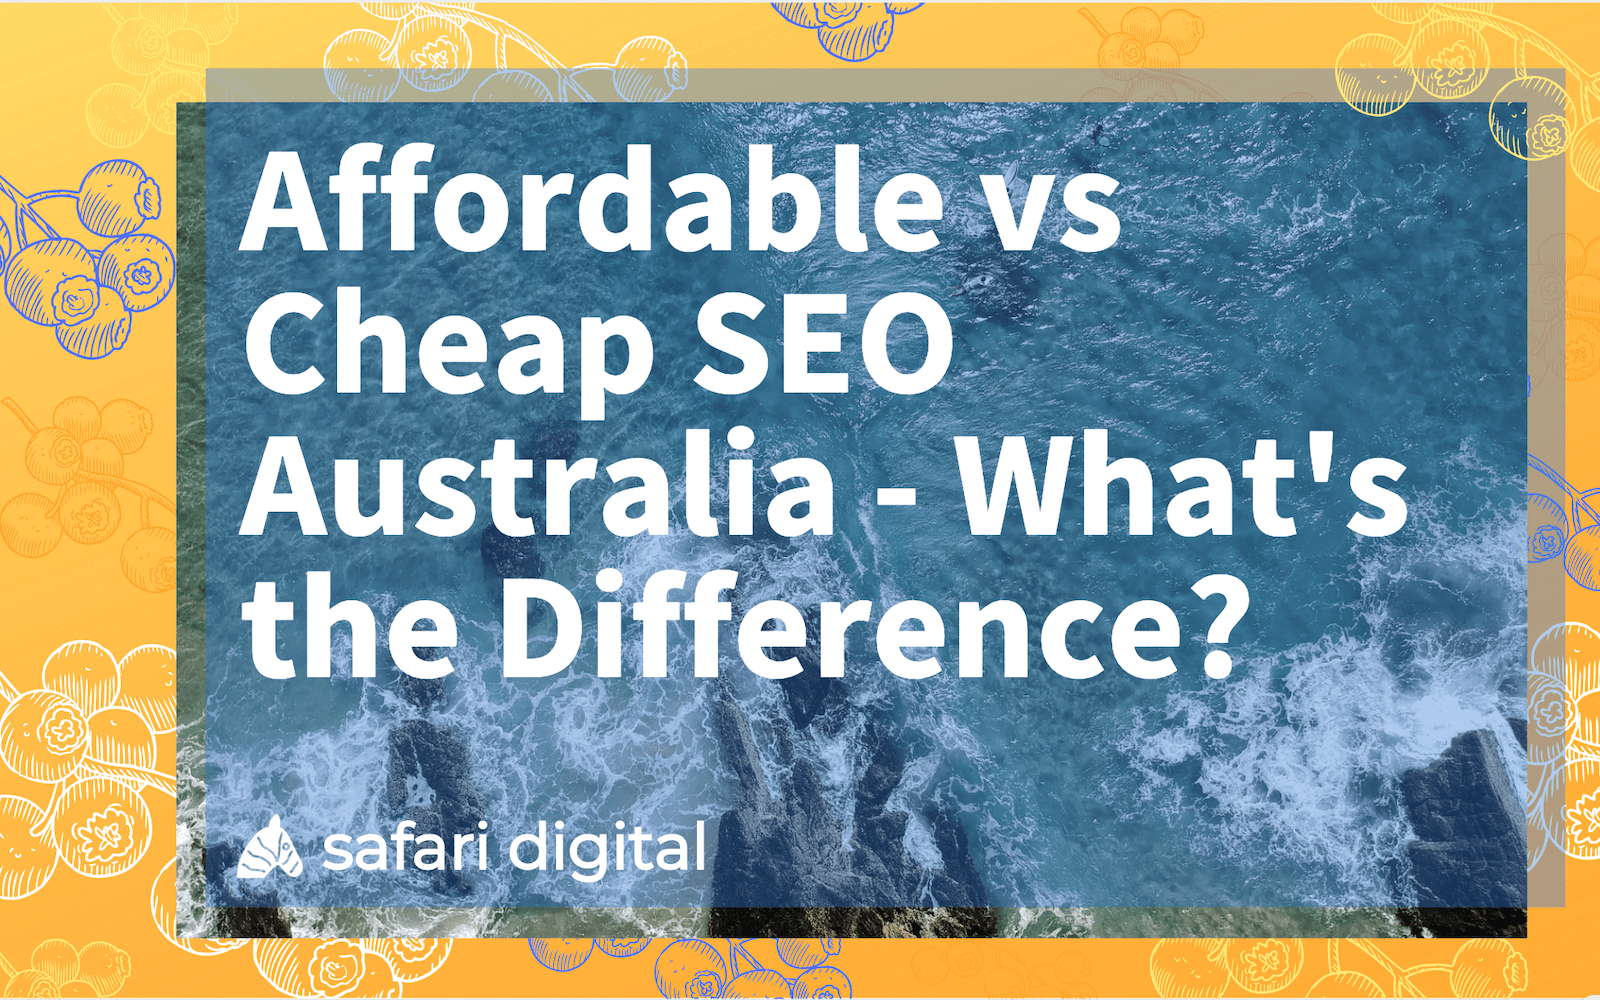 Cheap SEO Australia vs. Affordable SEO Australia large cover image